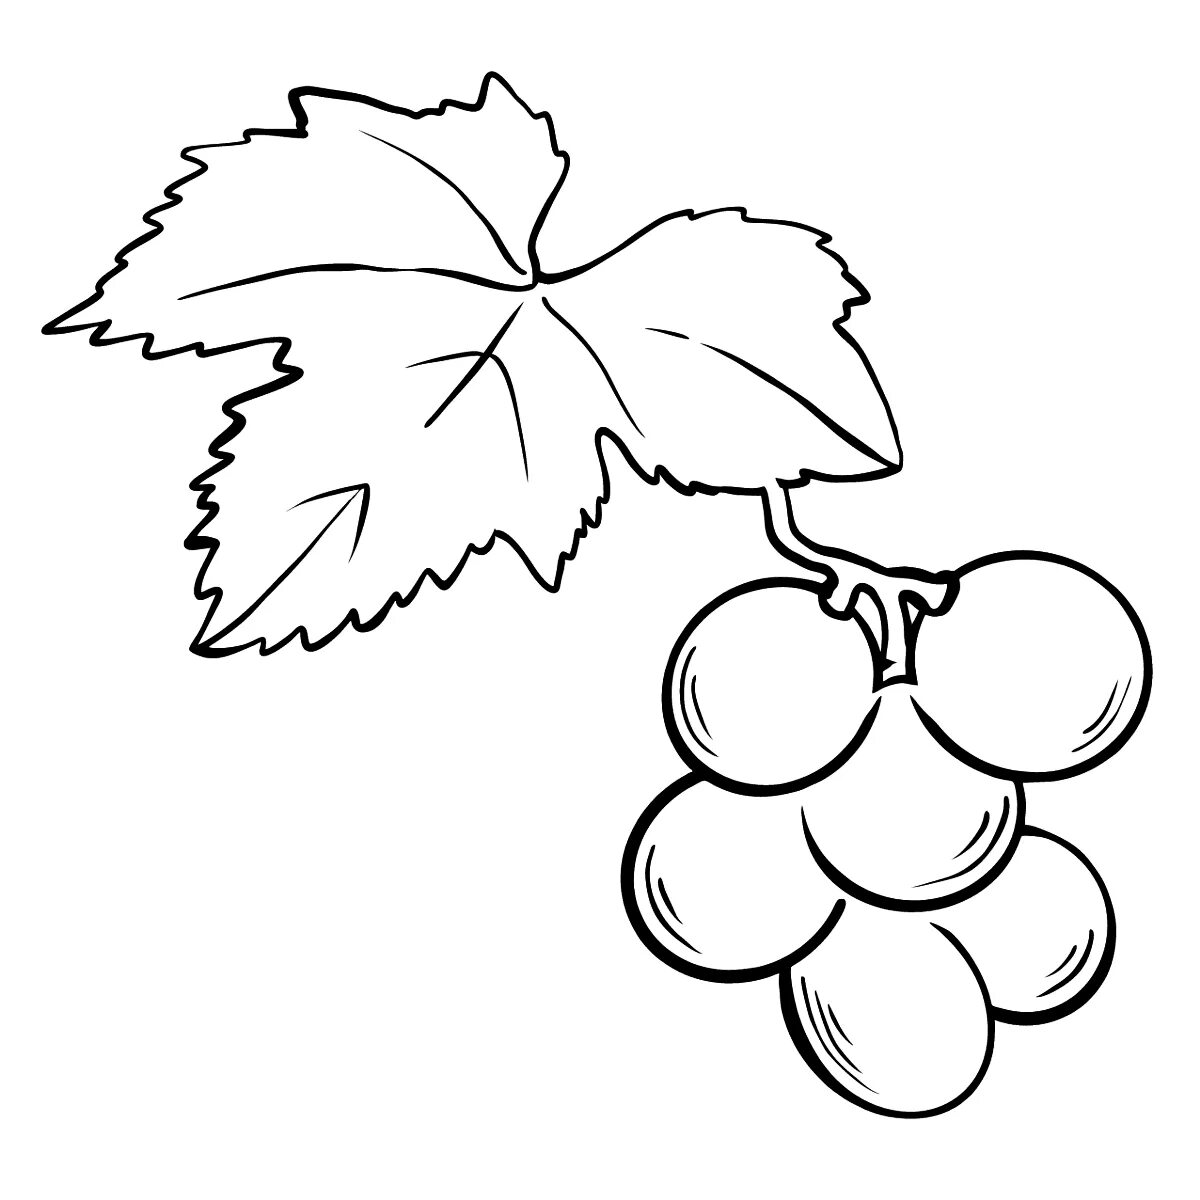 Листья винограда #11